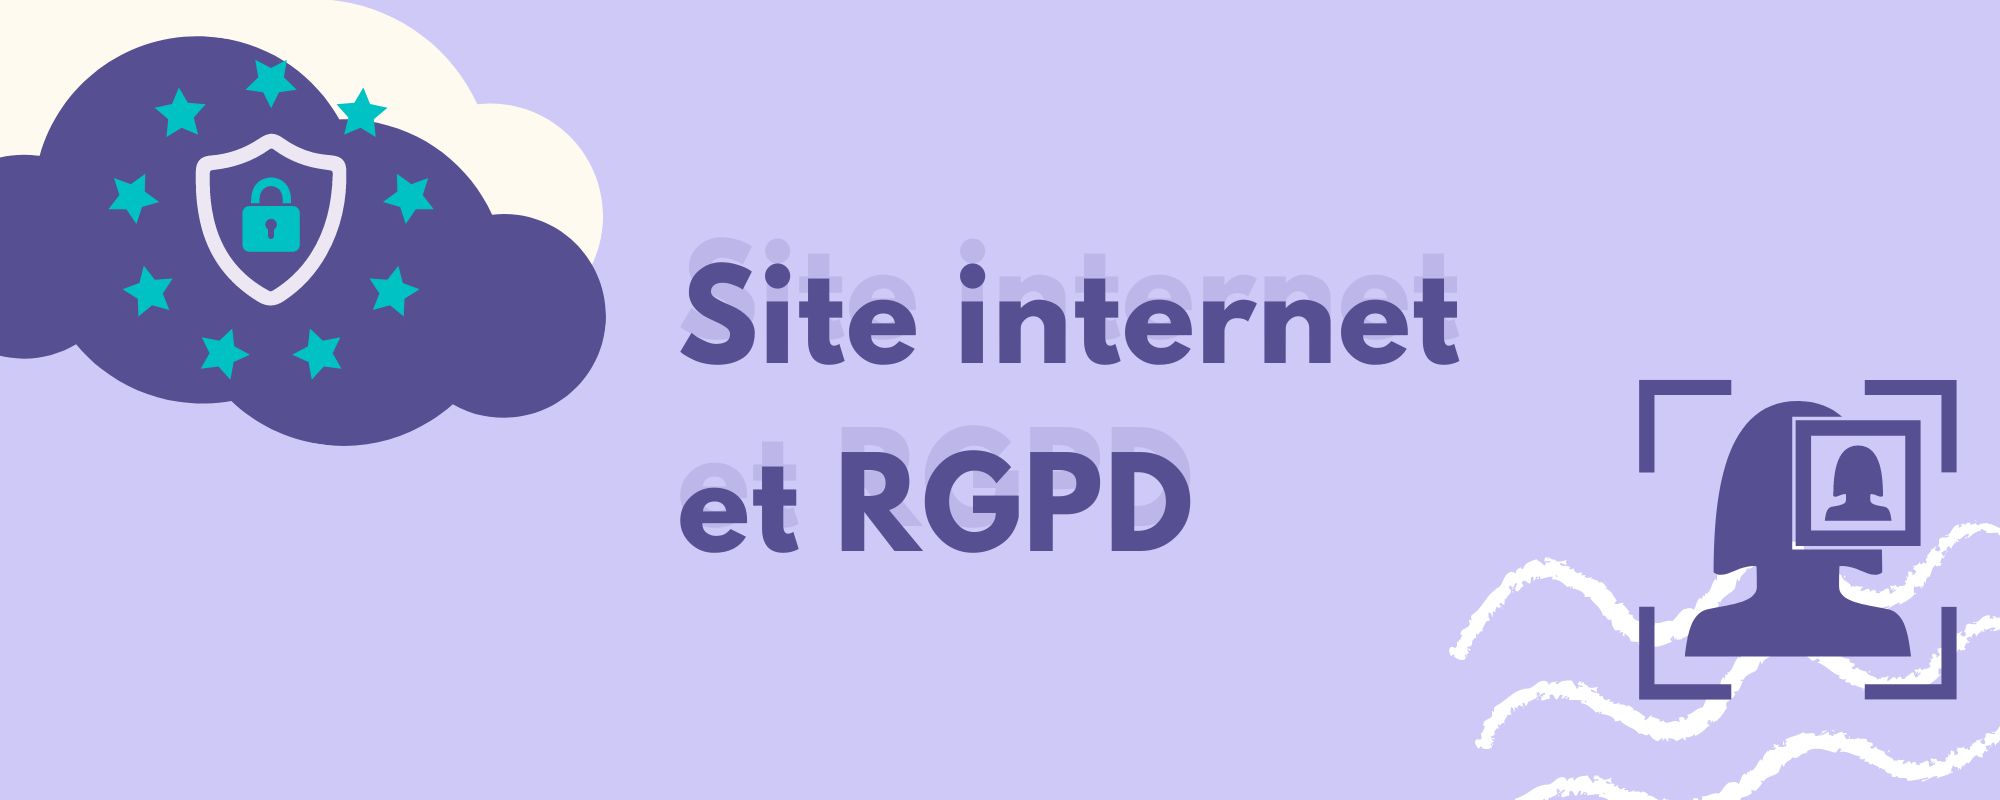 site internet et RGPD